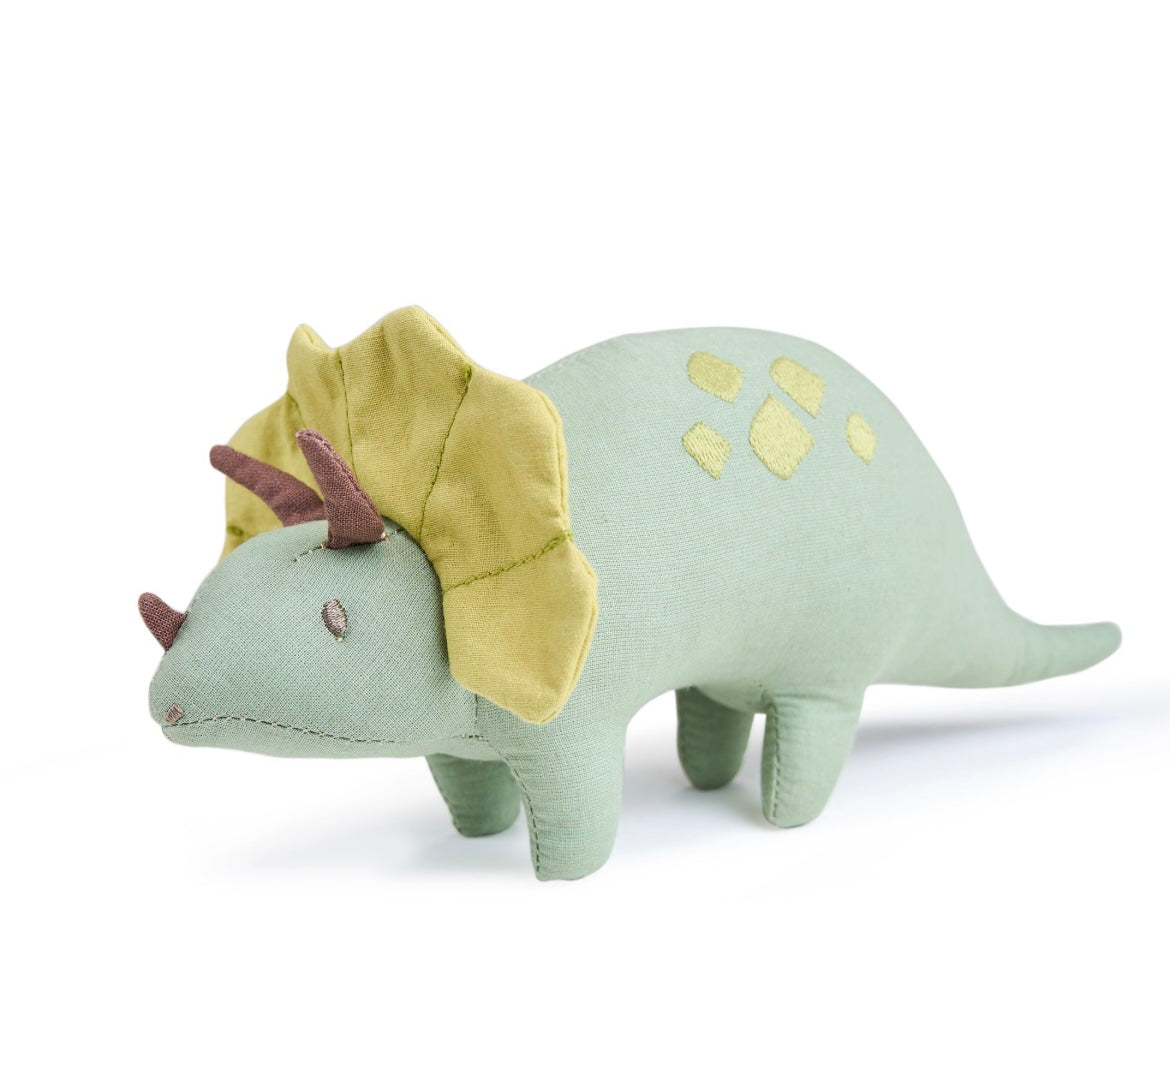 Trike Linen Dinosaur toy